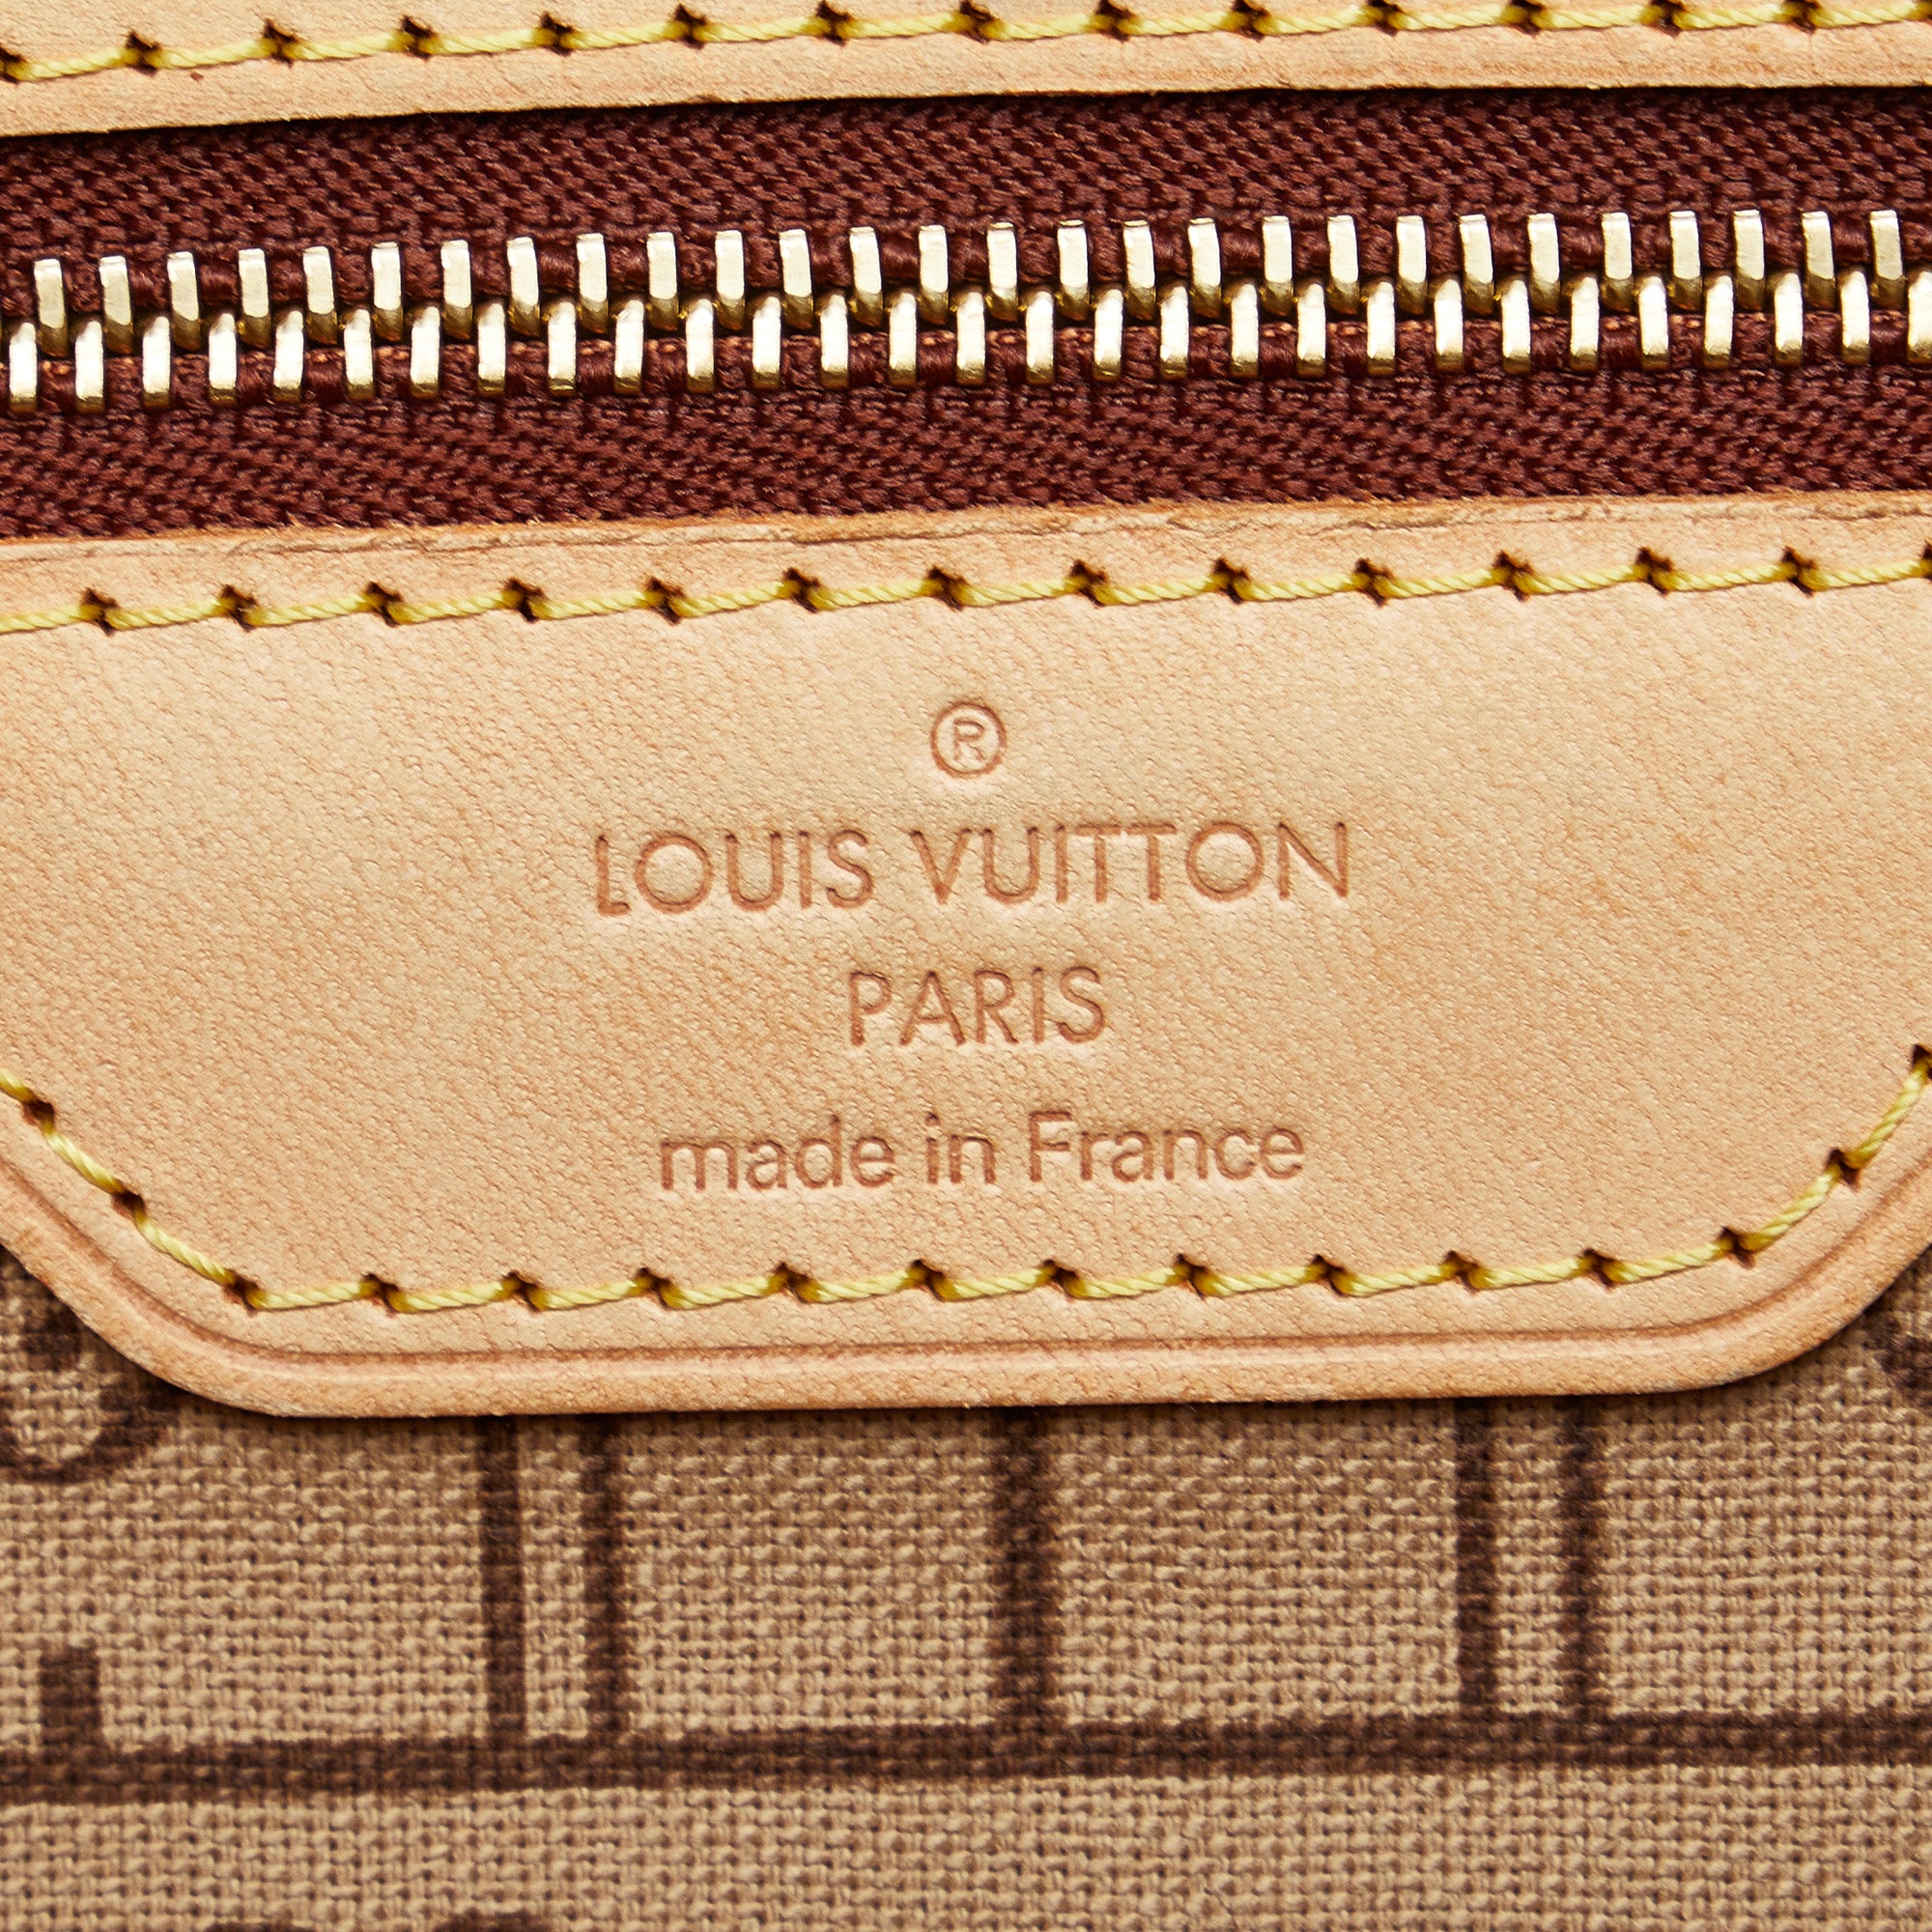 Brown Louis Vuitton Monogram Neverfull PM Tote Bag